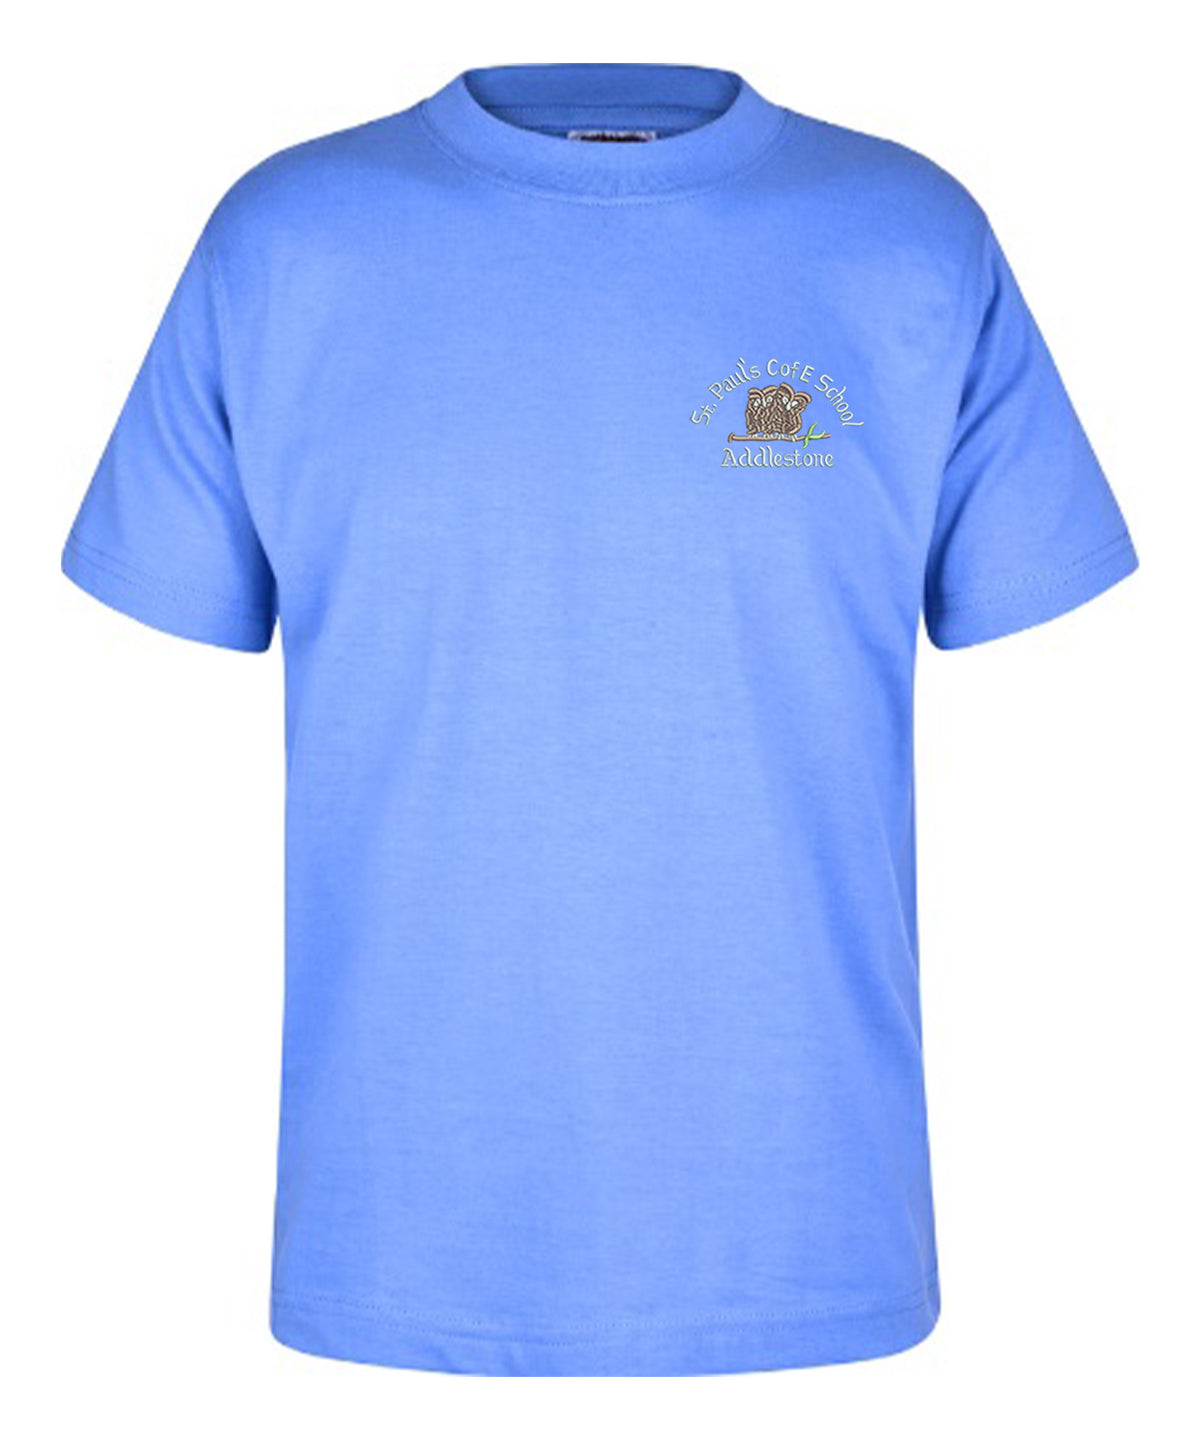 St Paul's C of E Primary School - Unisex Cotton T-Shirt